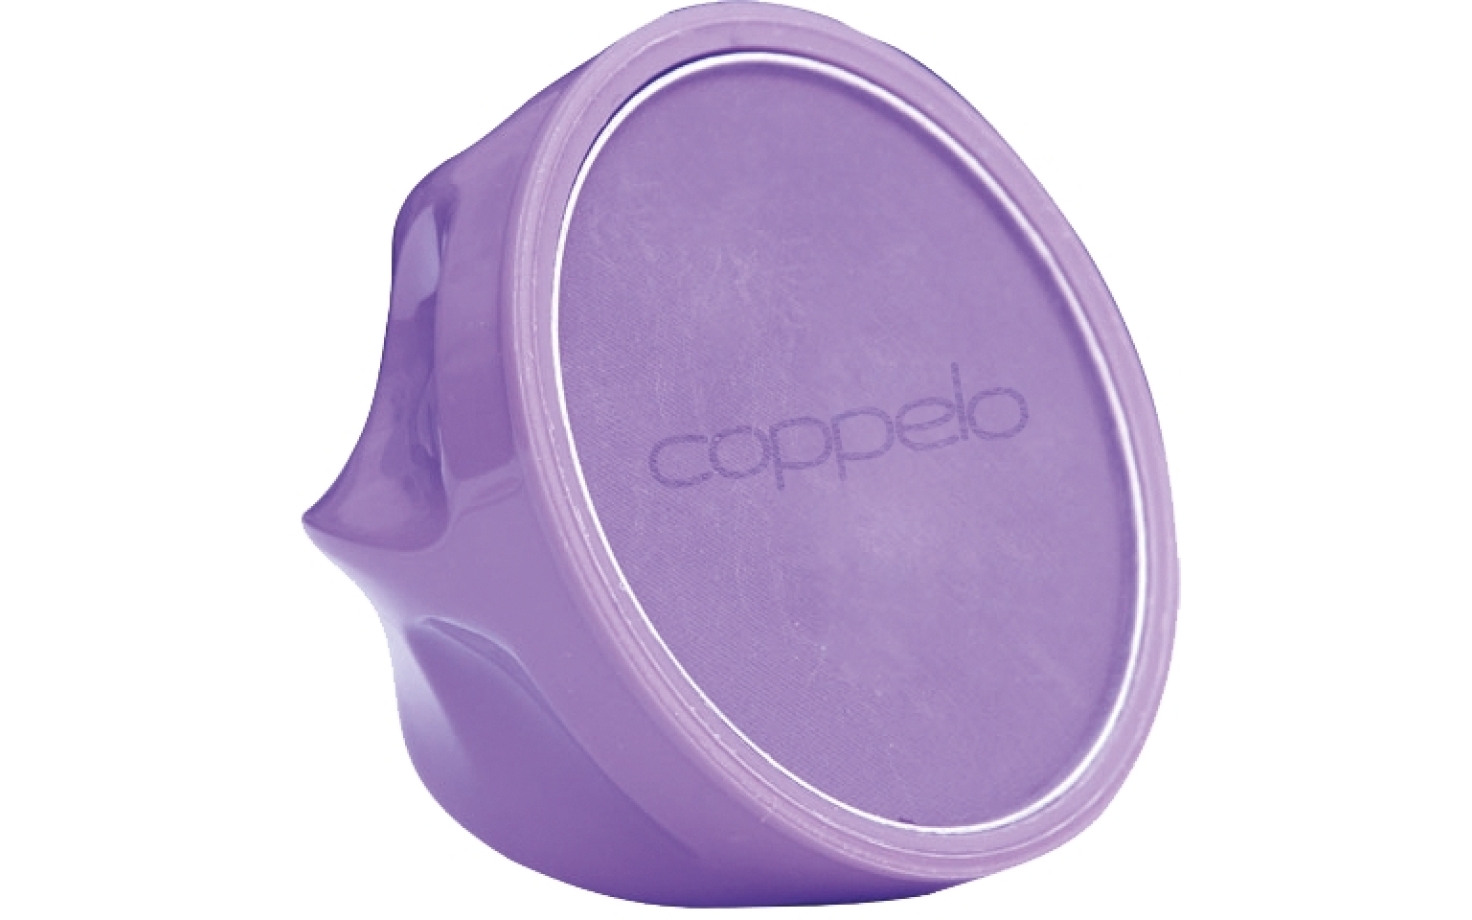 Coppelo Hair Make-up